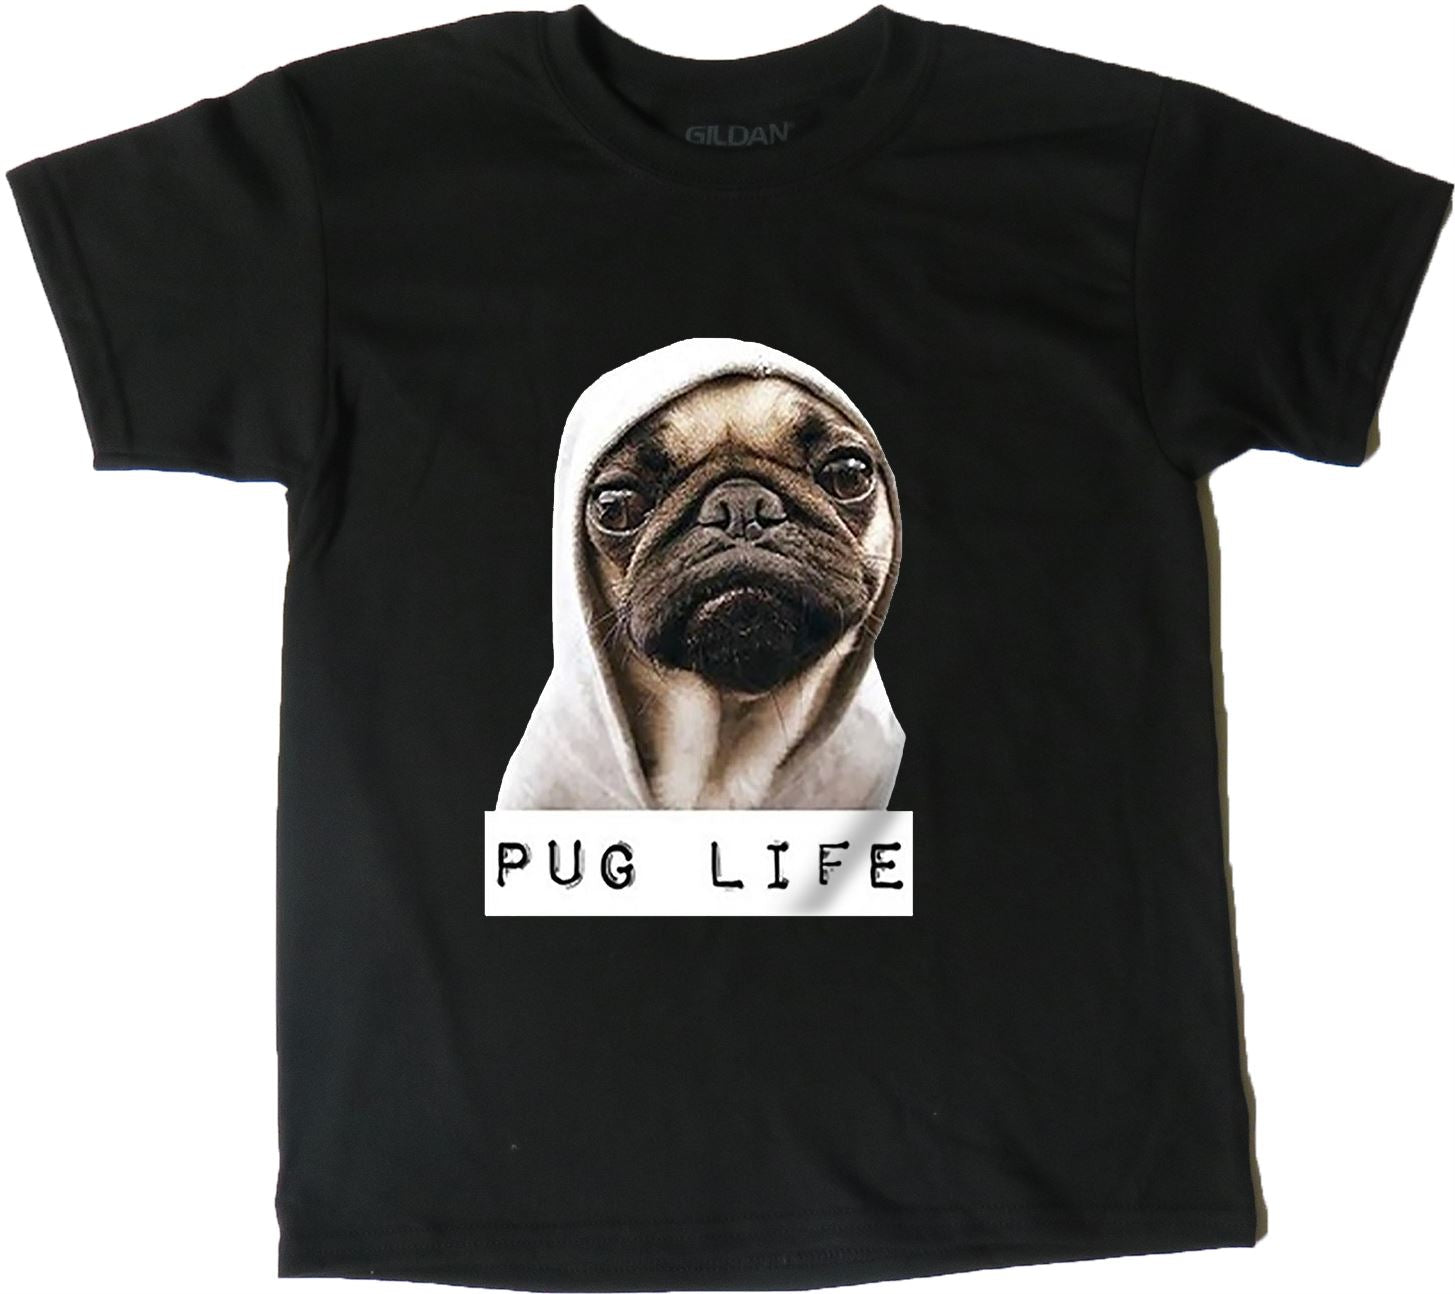 Pug Life Kids T-Shirt